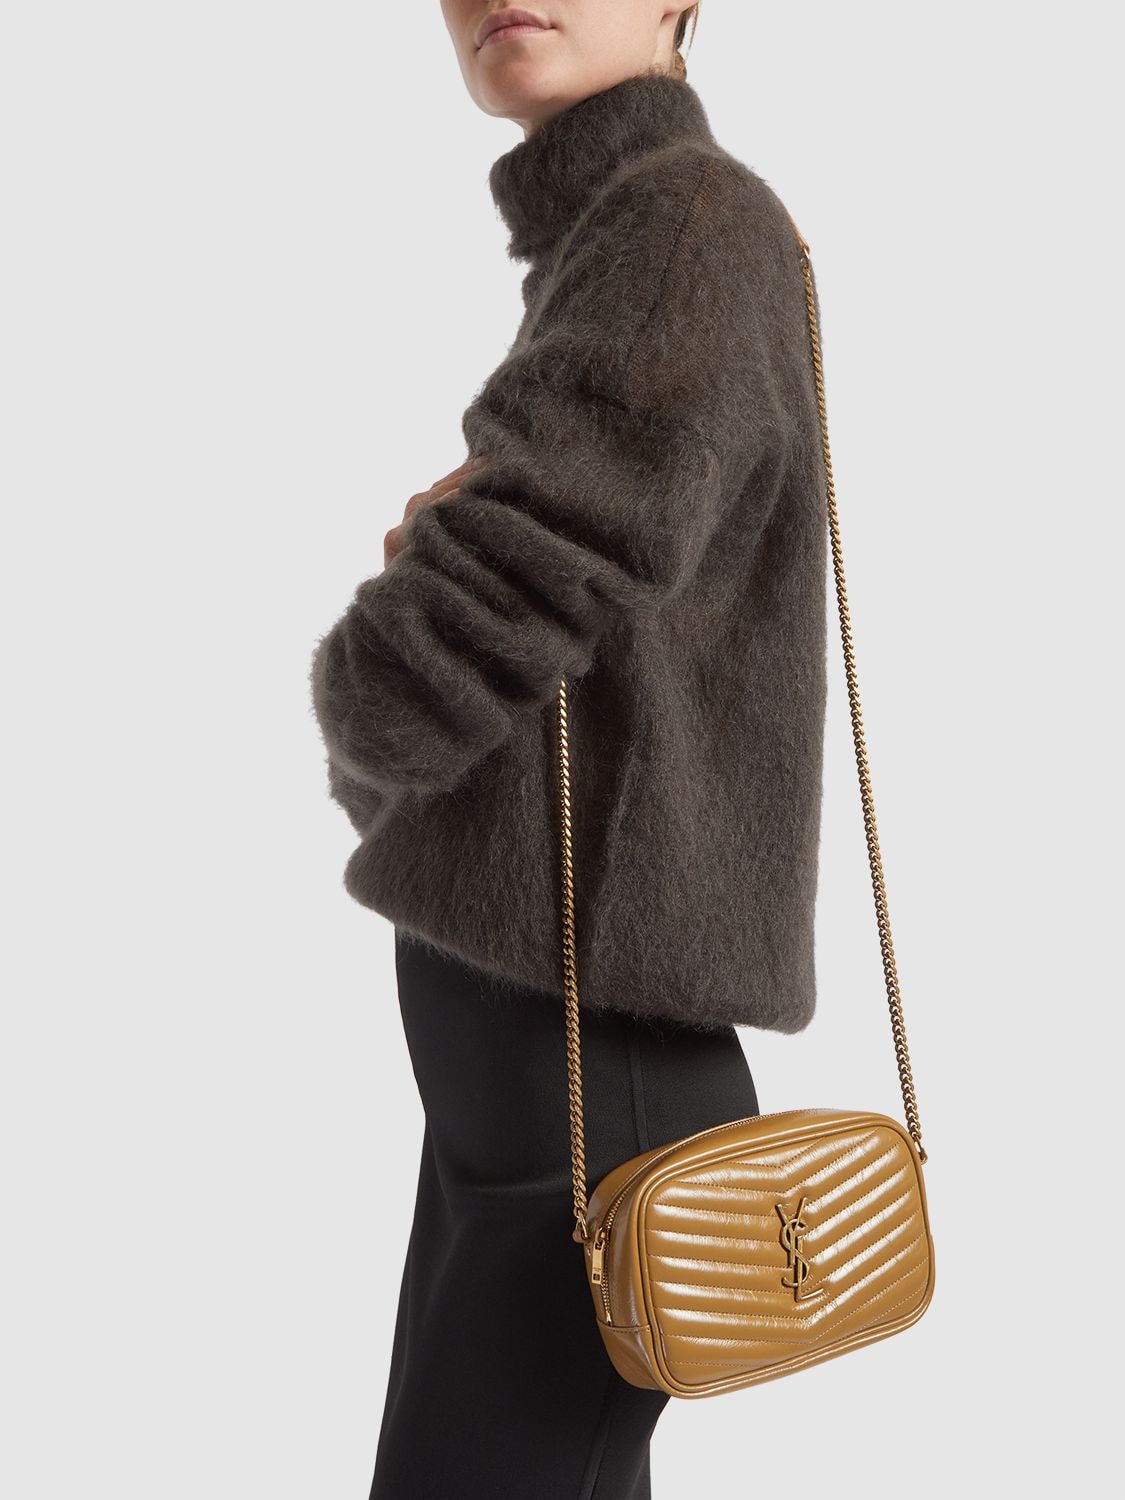 Solférino leather handbag Saint Laurent Beige in Leather - 34857421